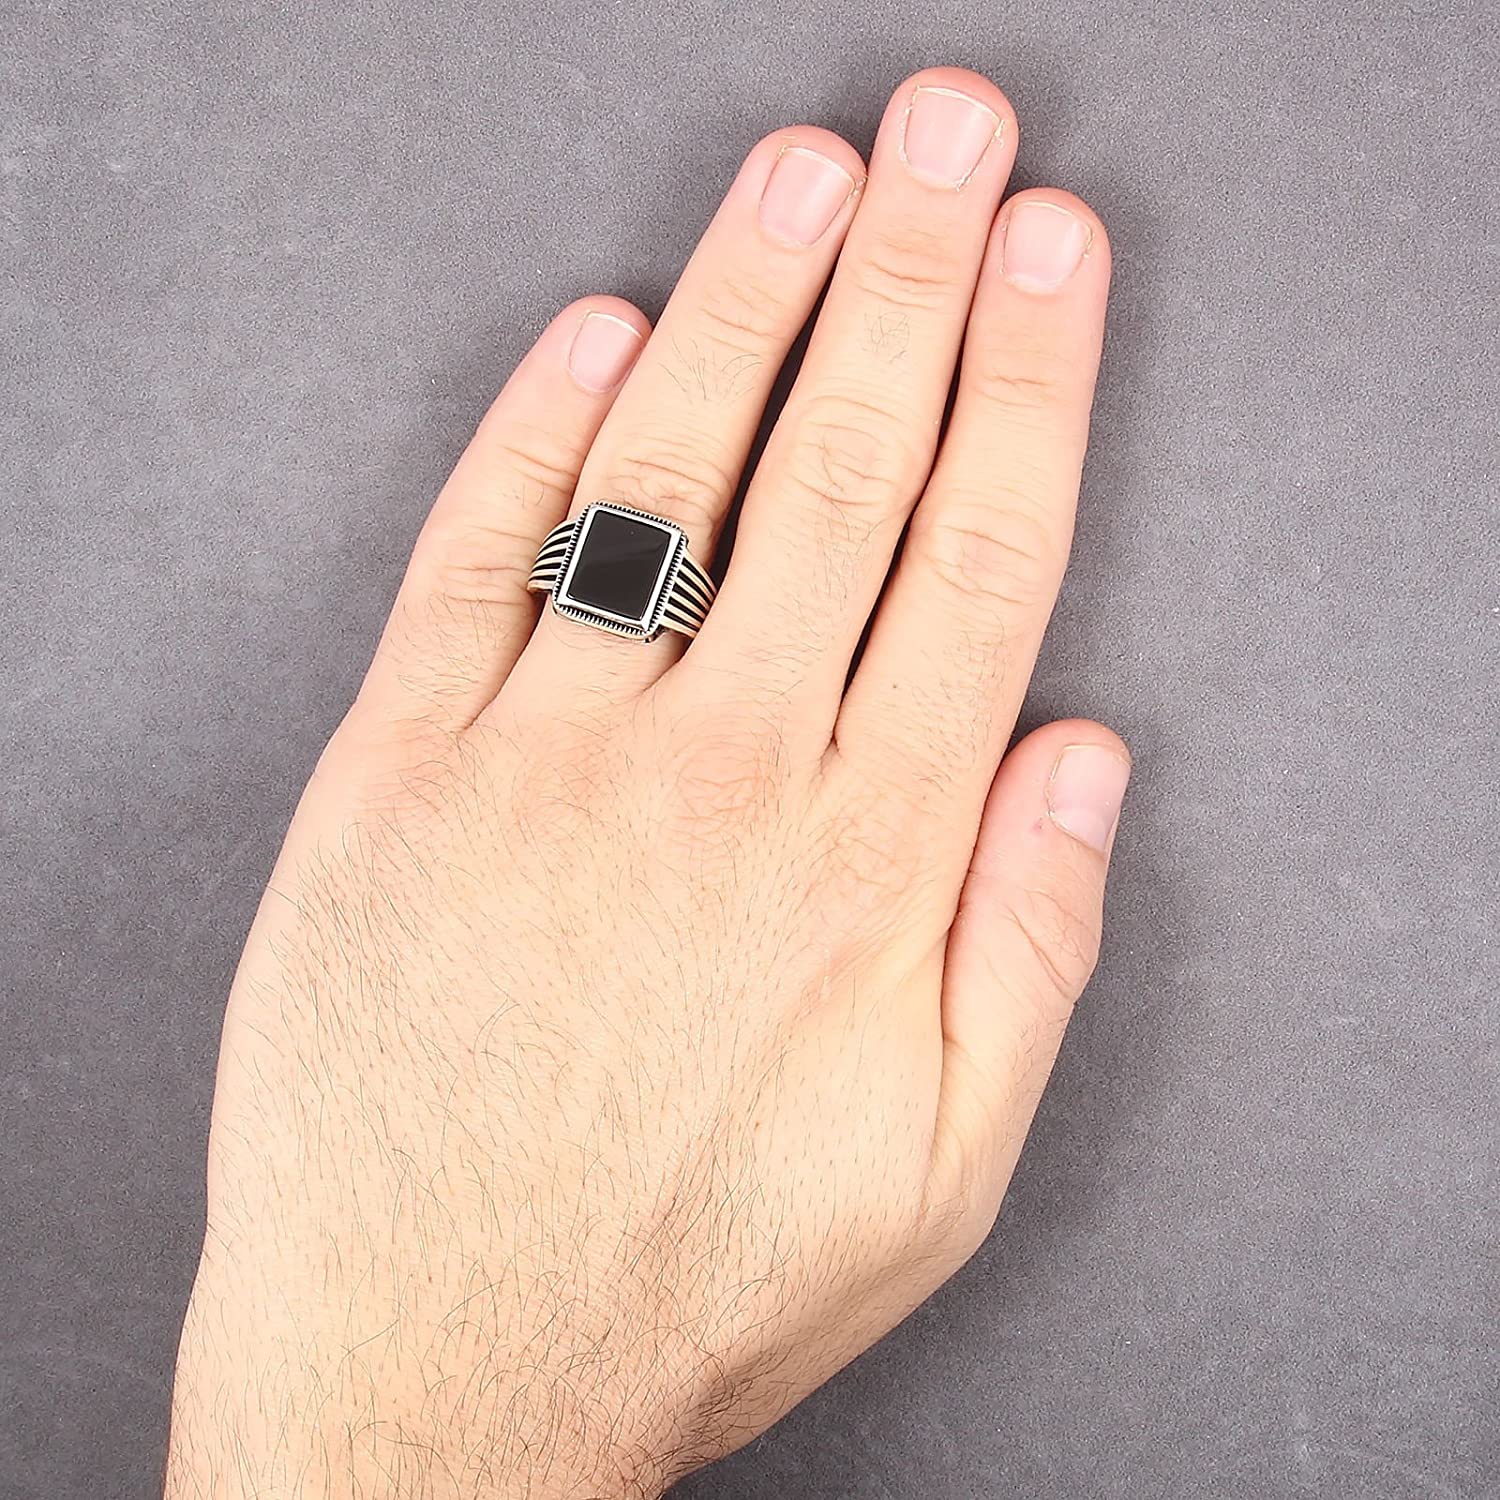 Stylish Men's Ring With Black Stone And White Diamond